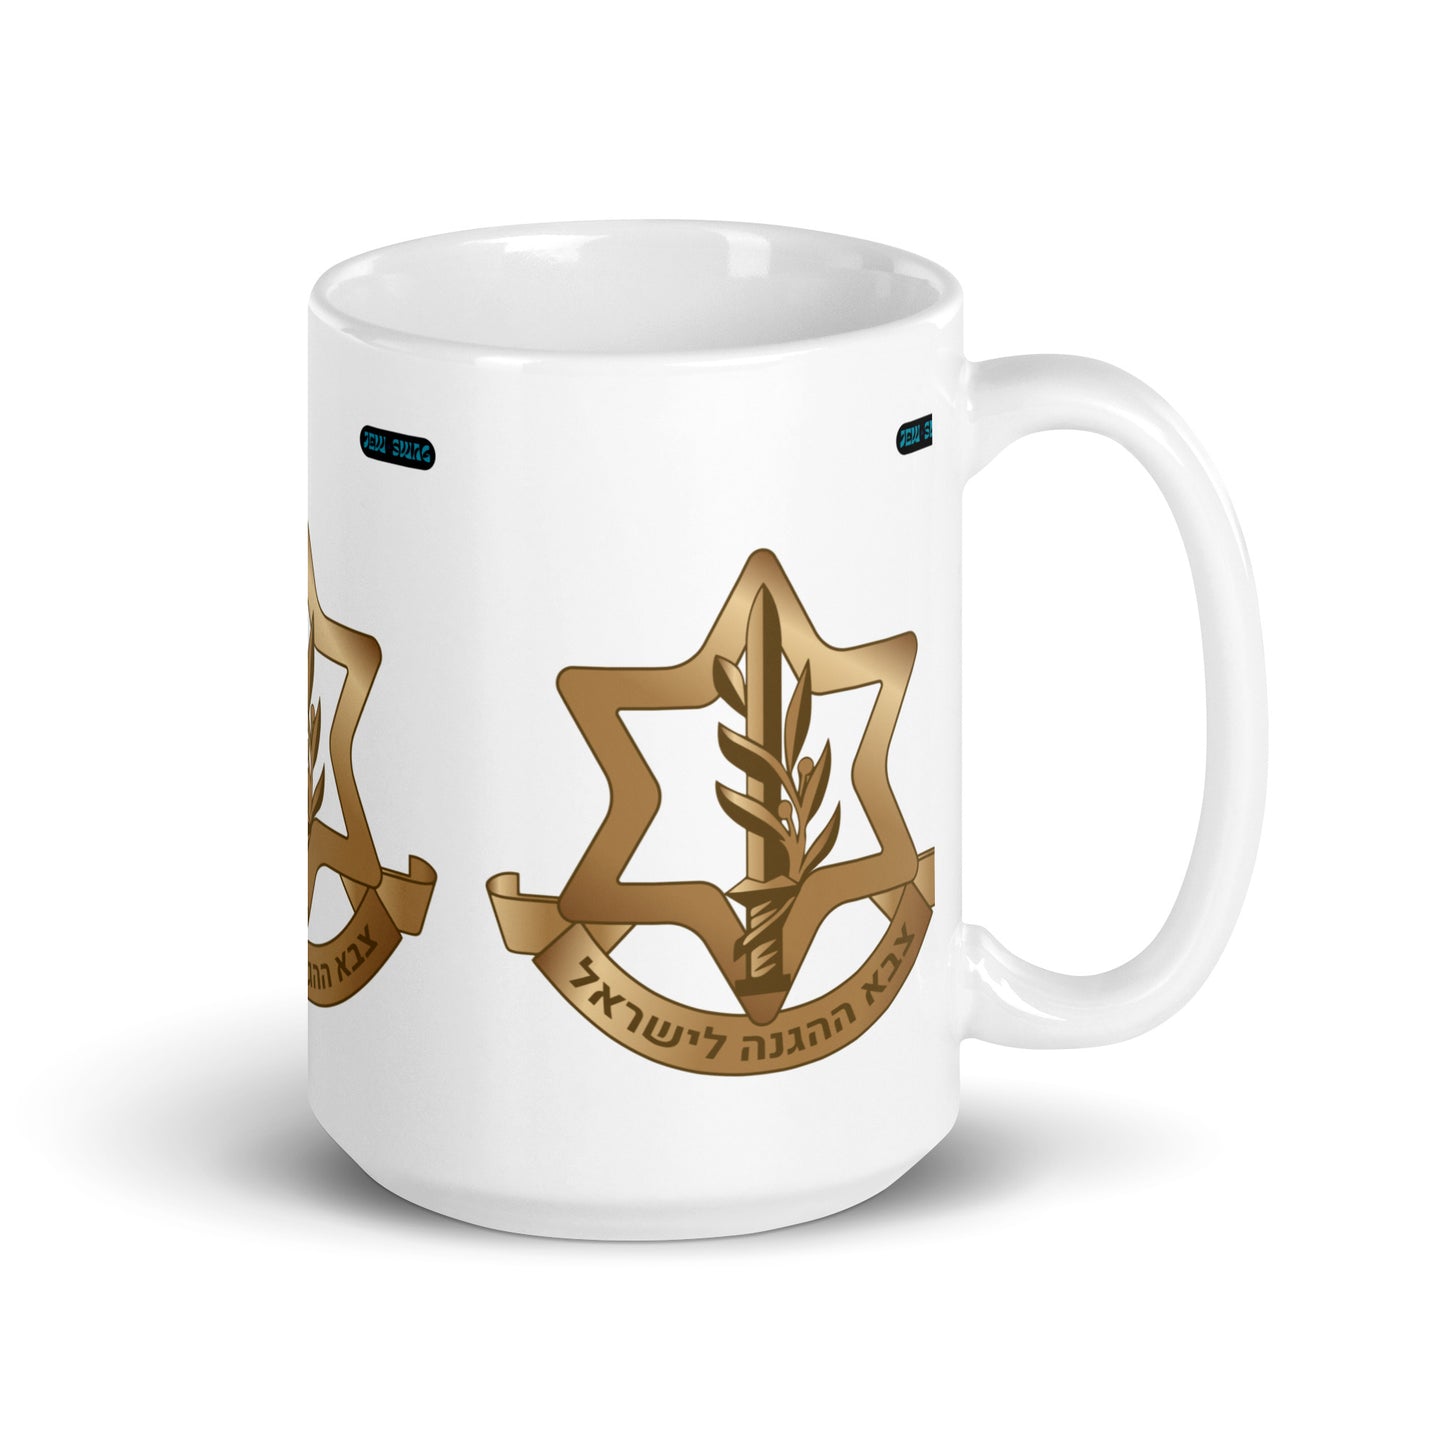 IDF - White glossy mug